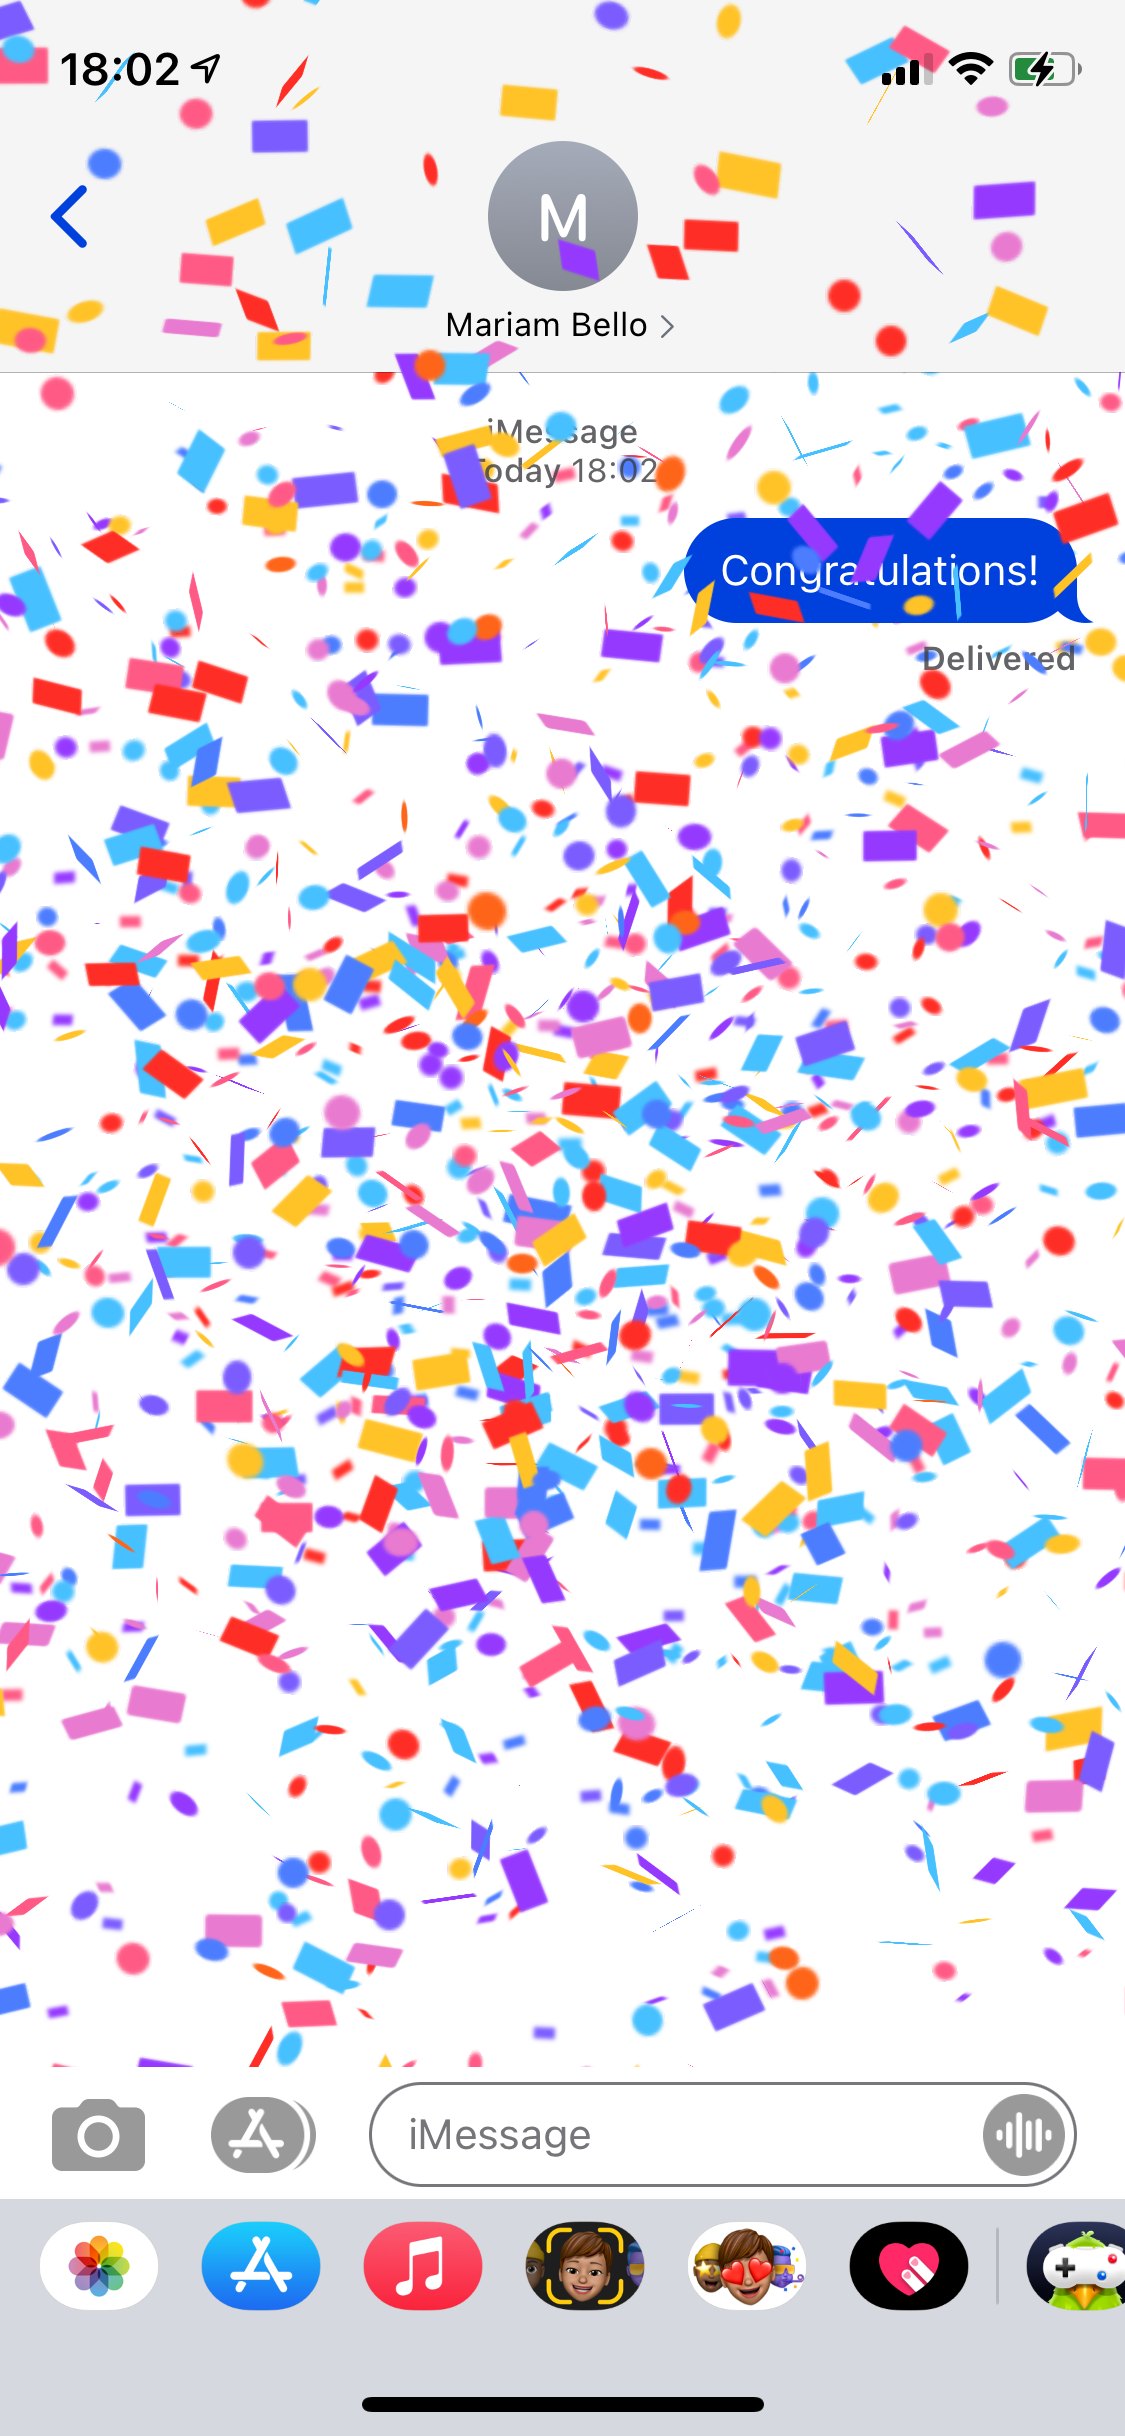 Sending a Congratulations message triggers the Confetti effect